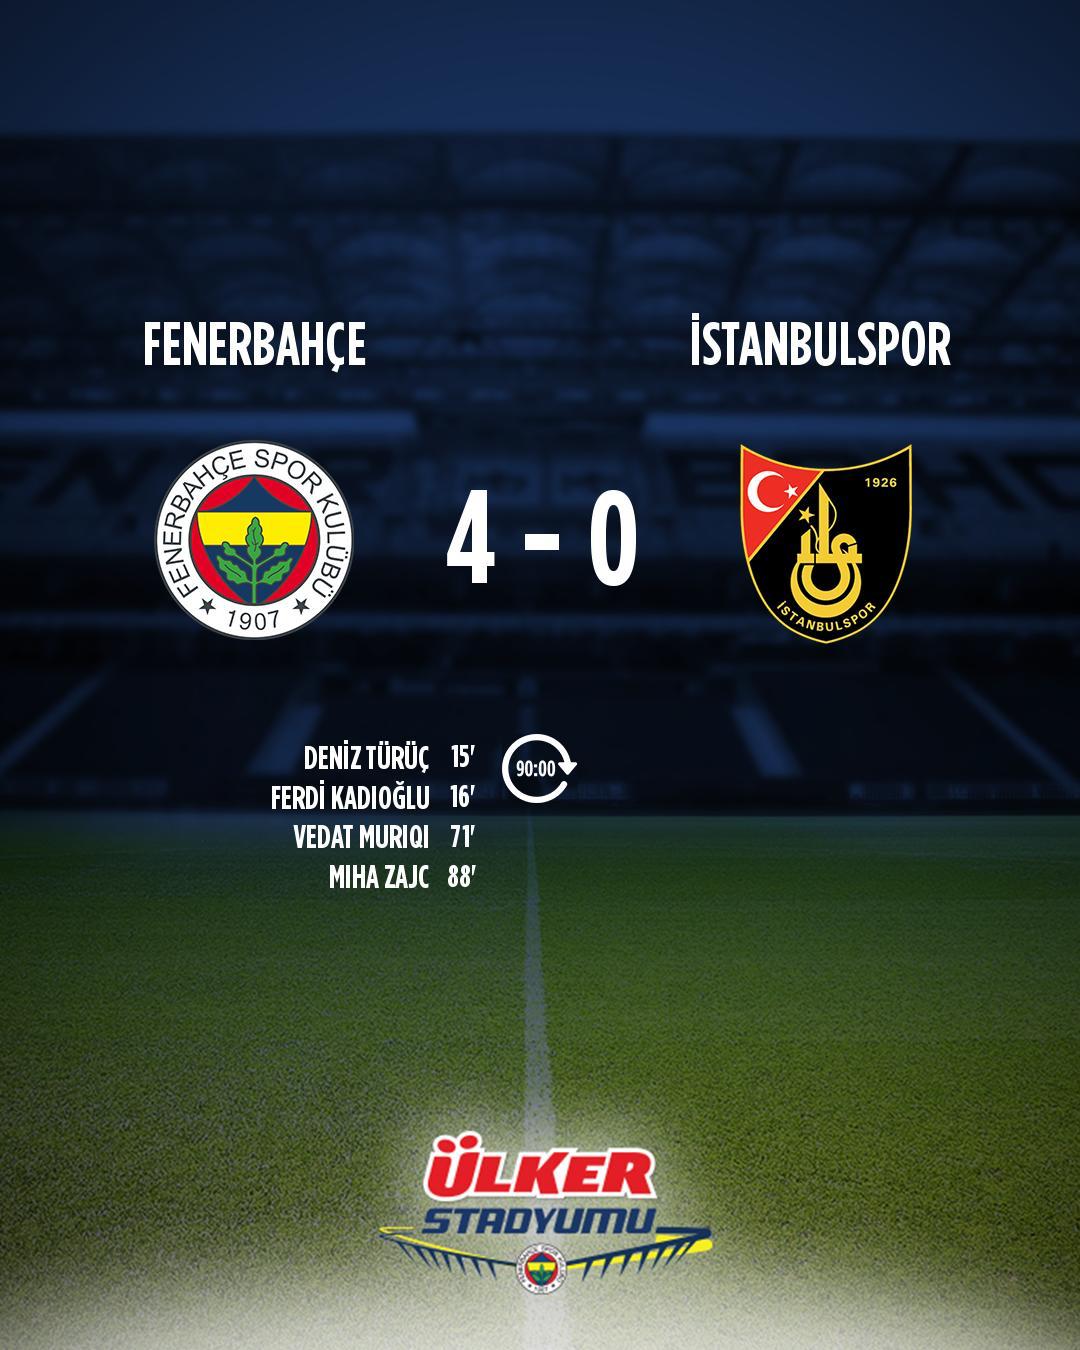 Fenerbahçe vs Trabzonspor: A Rivalry of Turkish Football Giants